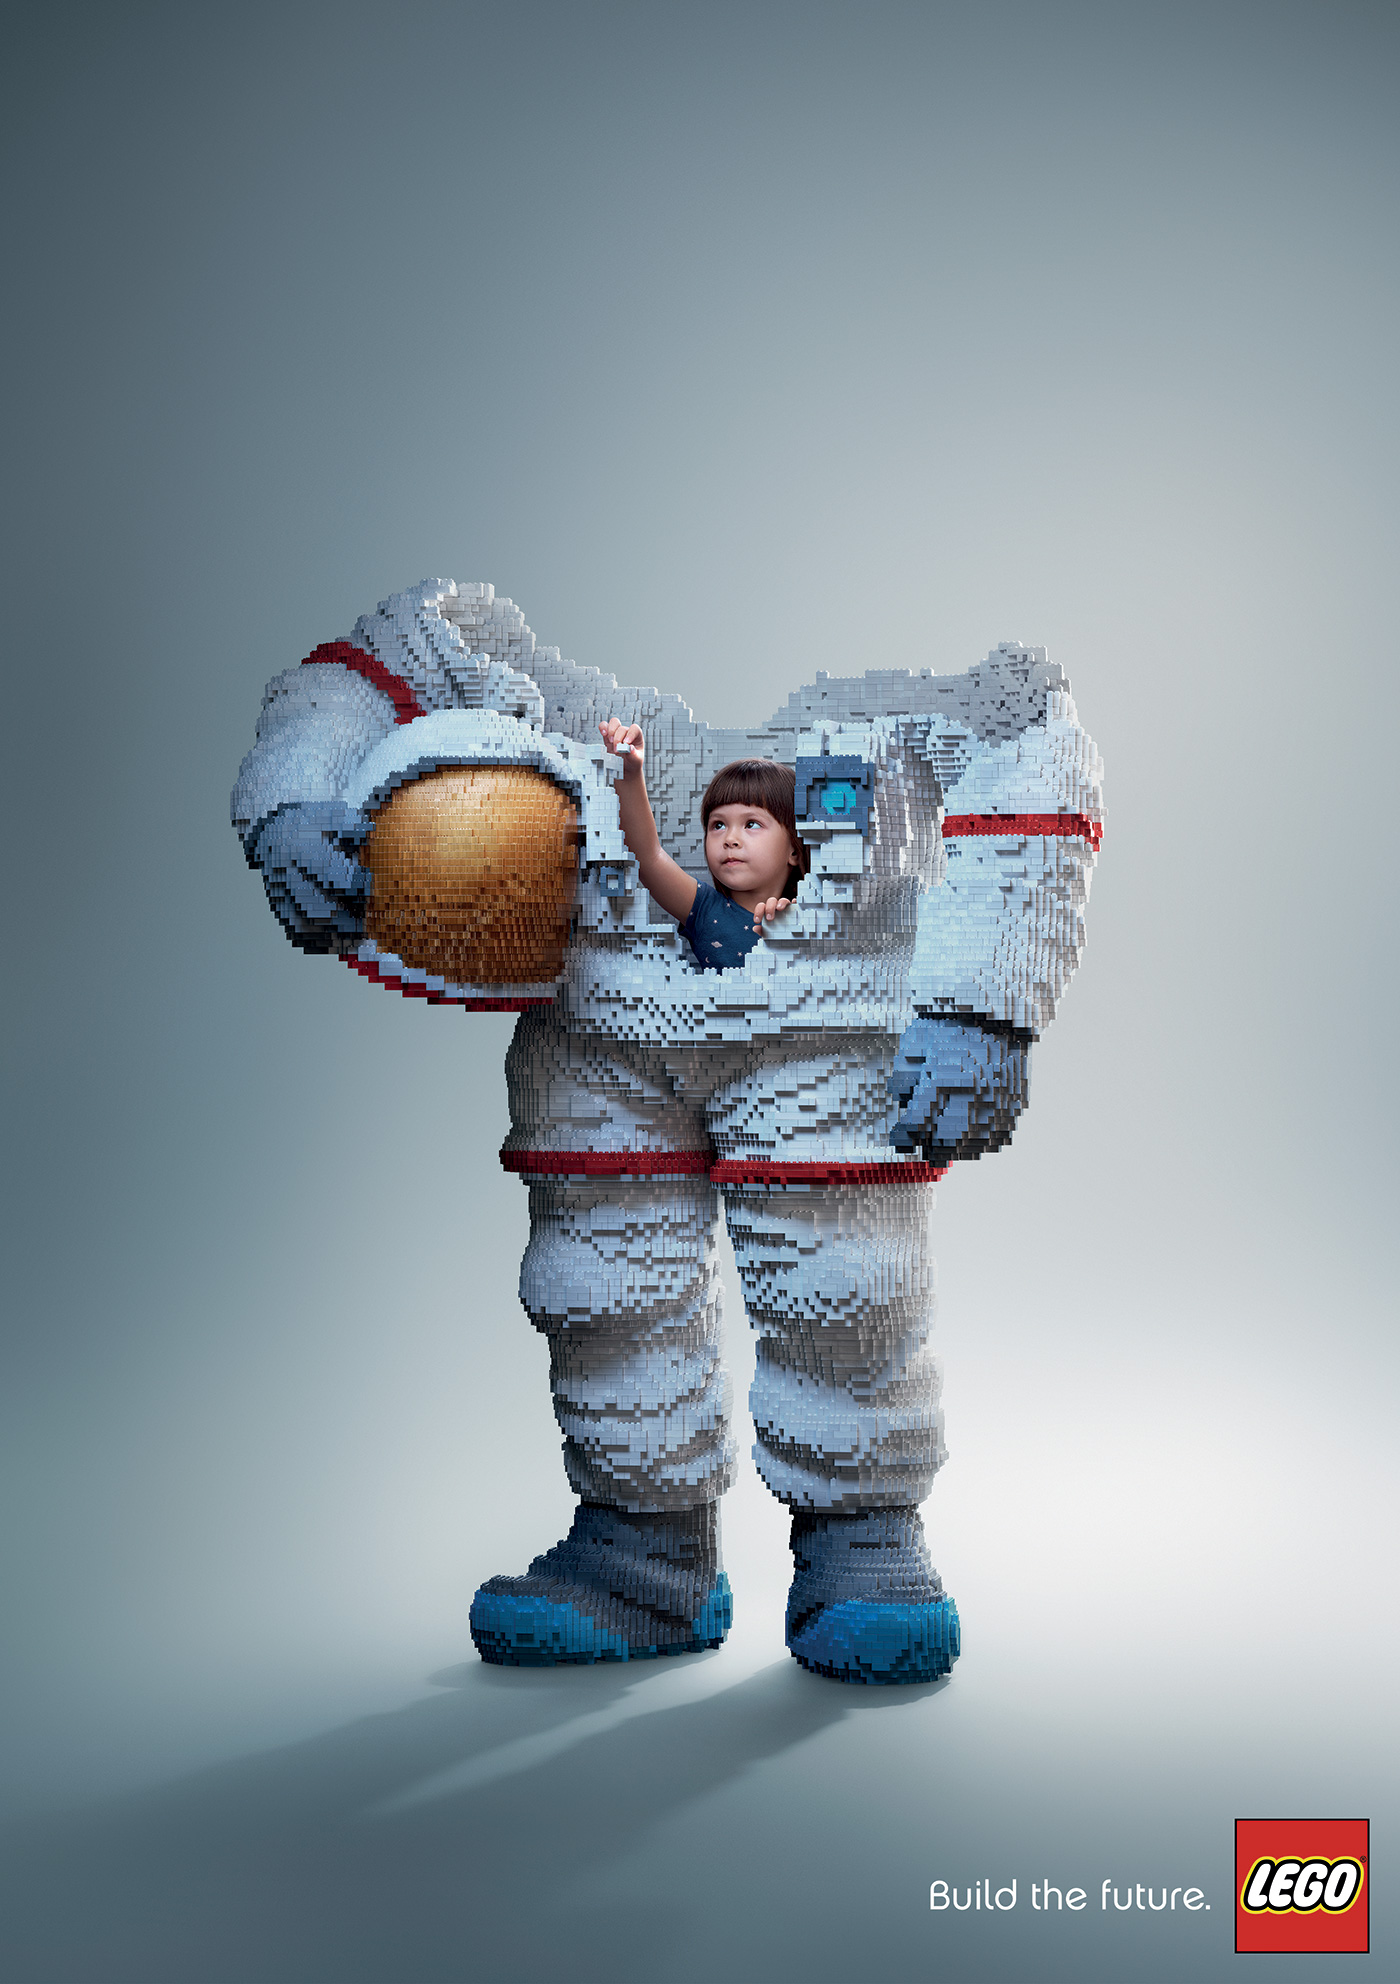 LEGO - Build the future - Affiche - Astronaut